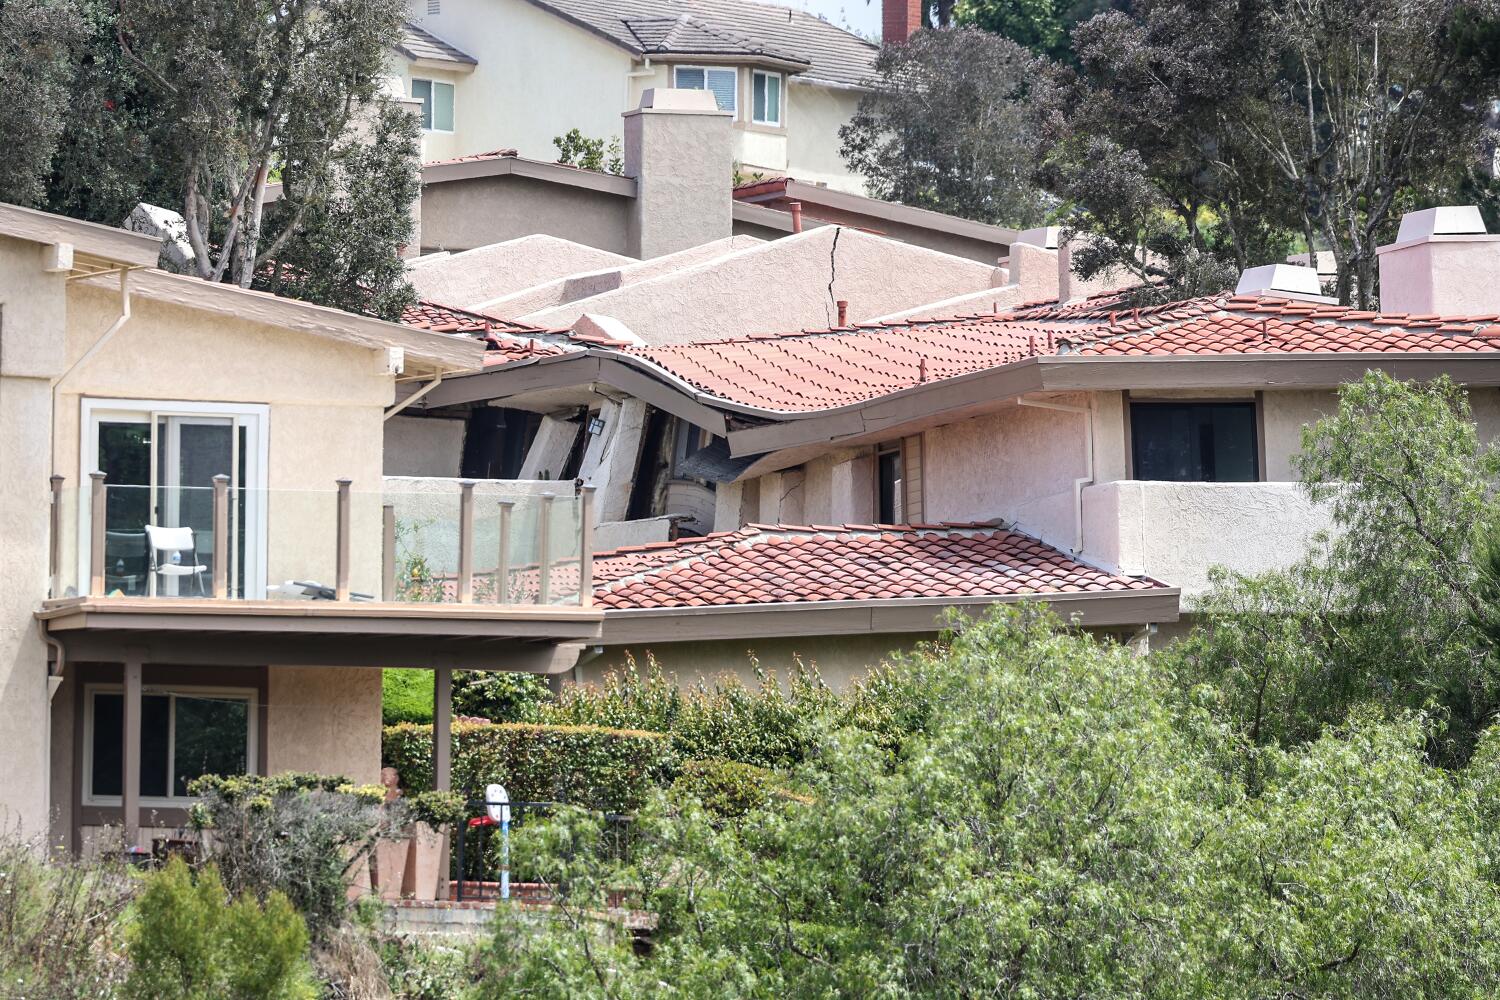 Rancho Palos Verdes declares emergency after landslides; more damage feared in upcoming winter